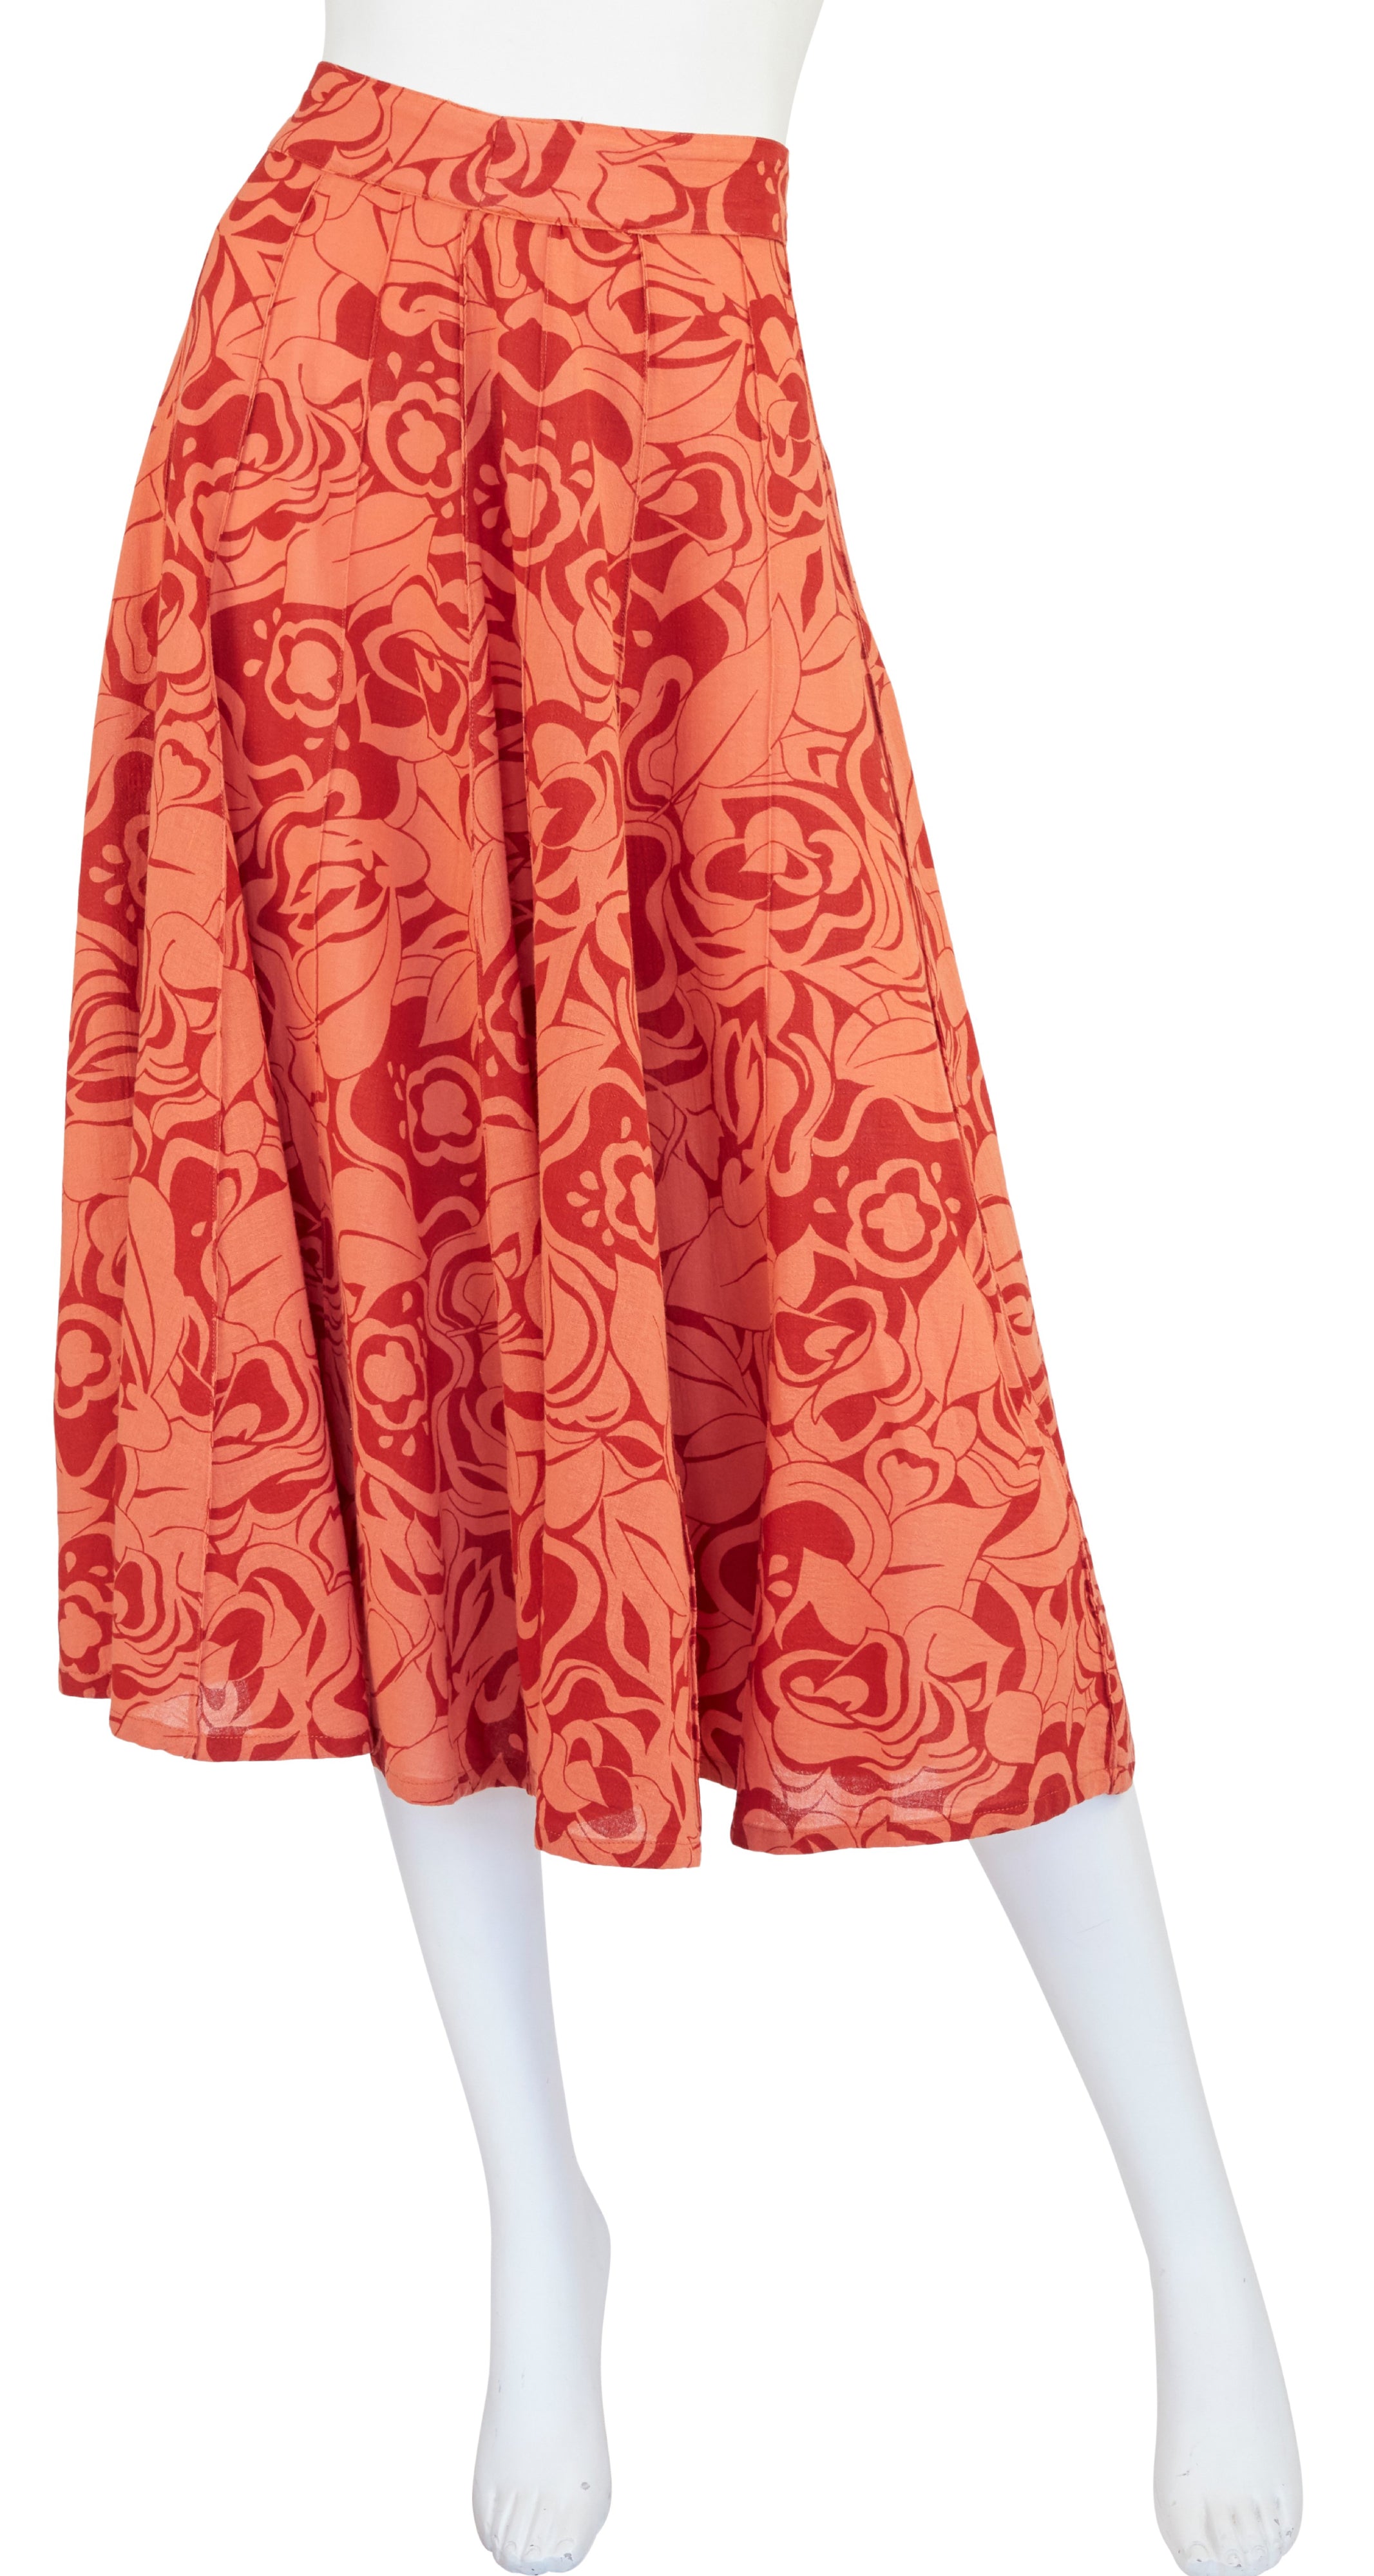 1980s Orange Floral Cotton Circle Skirt